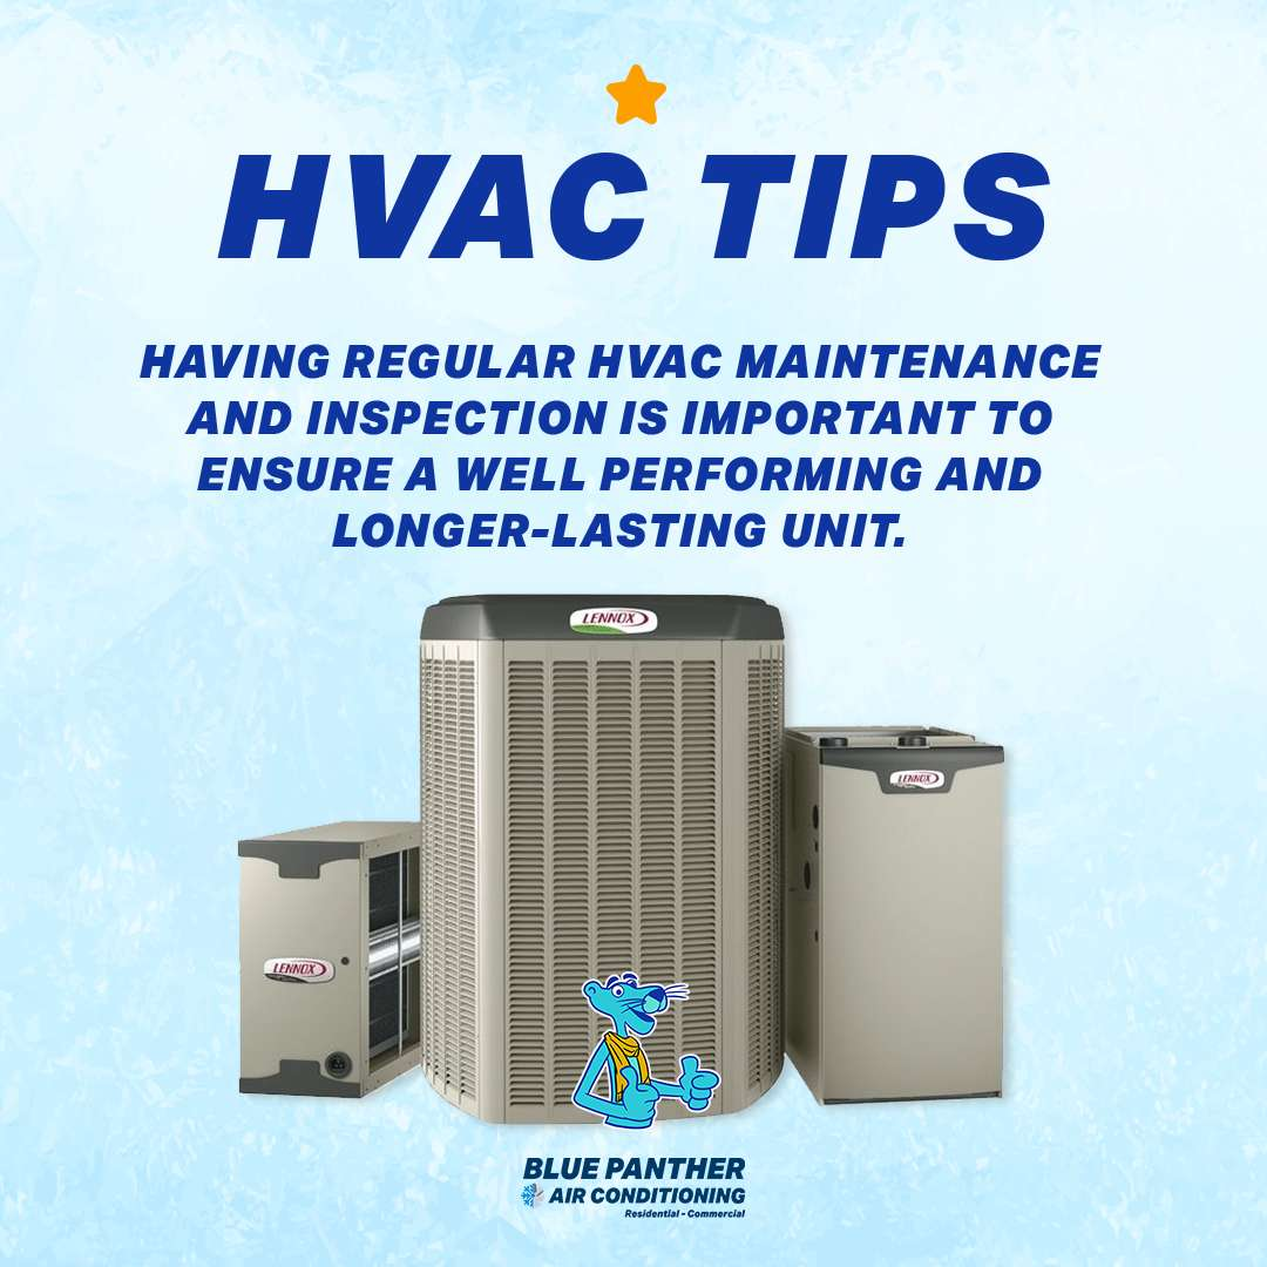 HVAC Tips